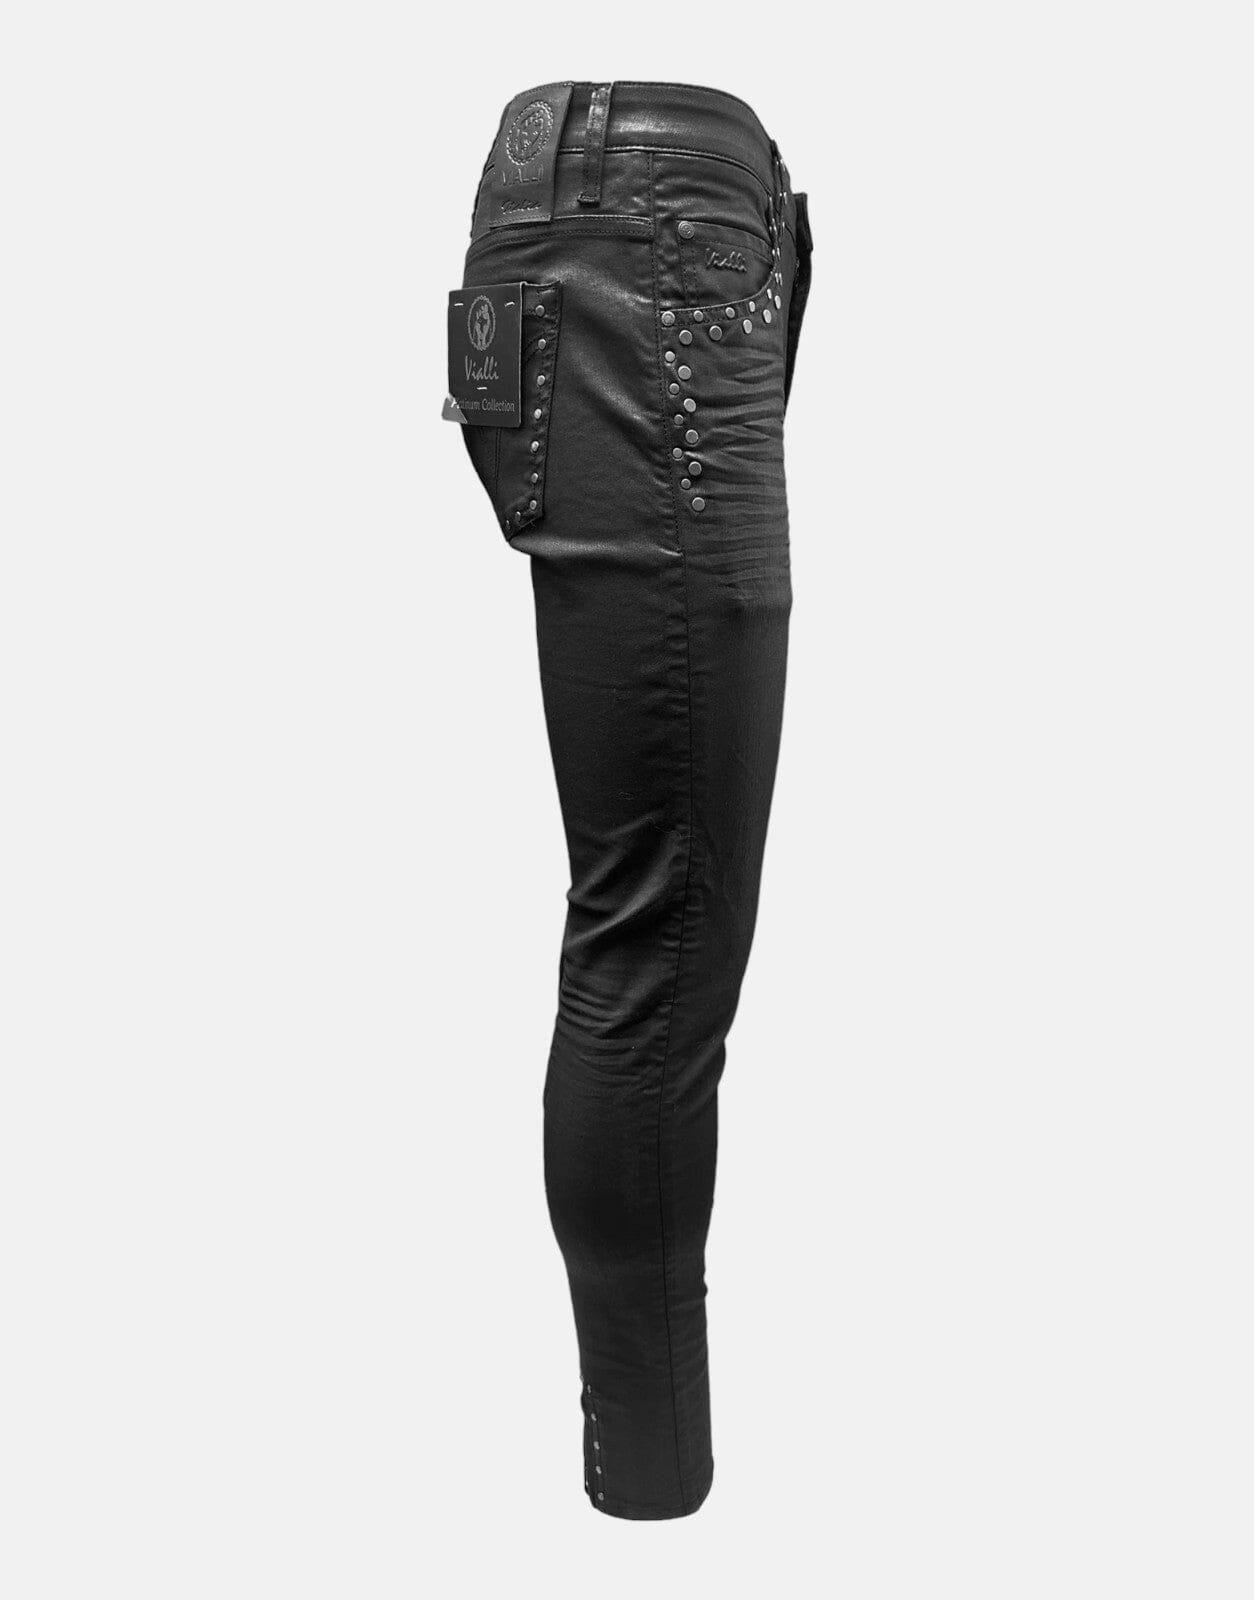 Vialli Dagger Ultra Fit Black Jeans - Subwear